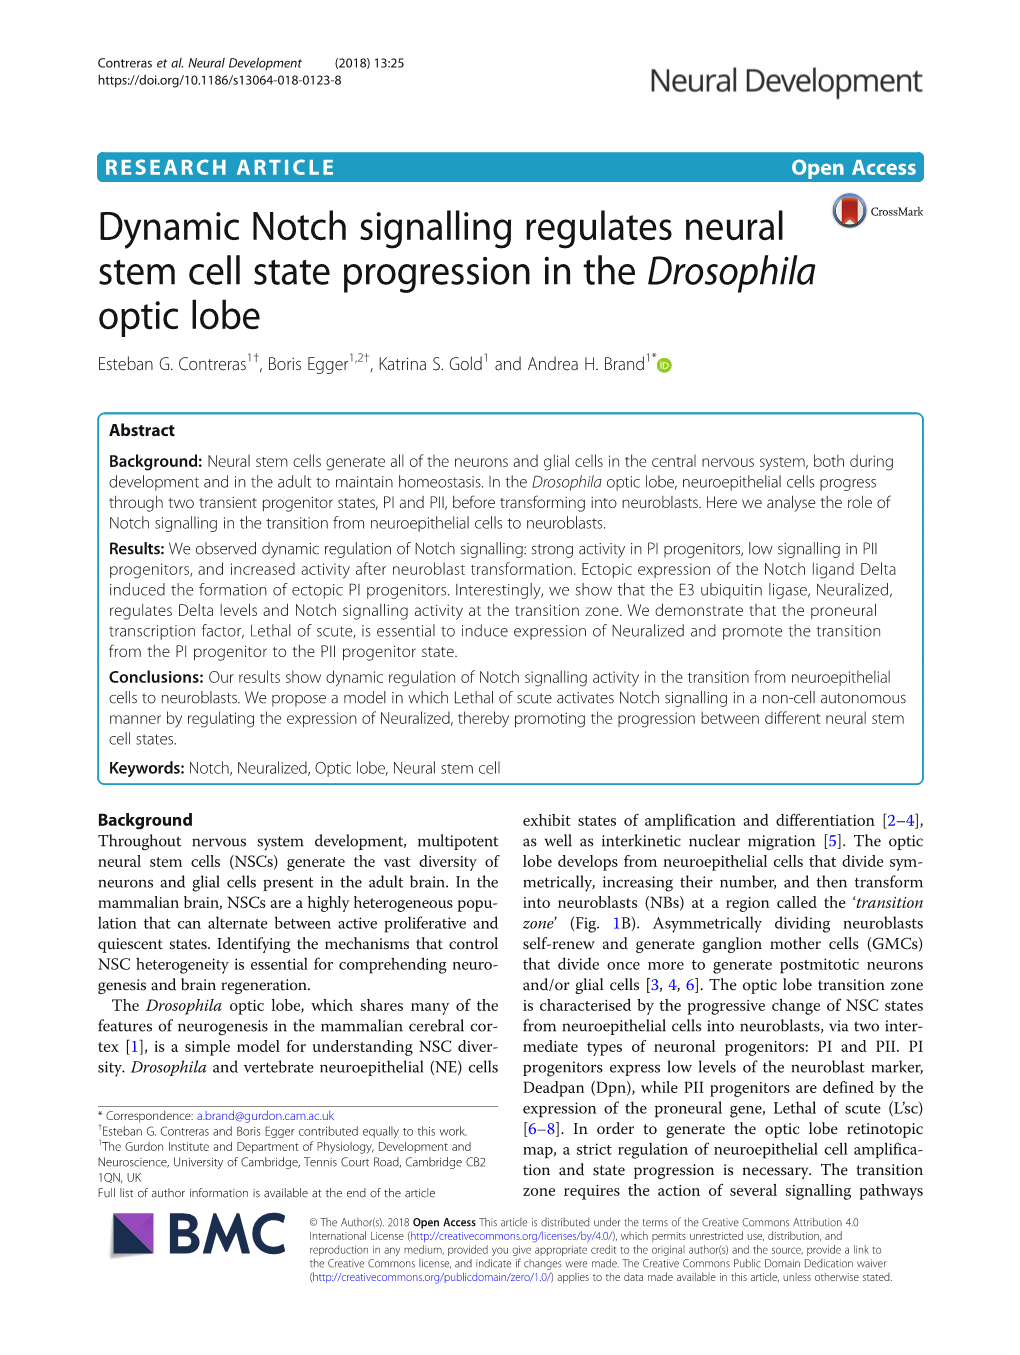 Dynamic Notch Signalling Regulates Neural Stem Cell State Progression in the Drosophila Optic Lobe Esteban G